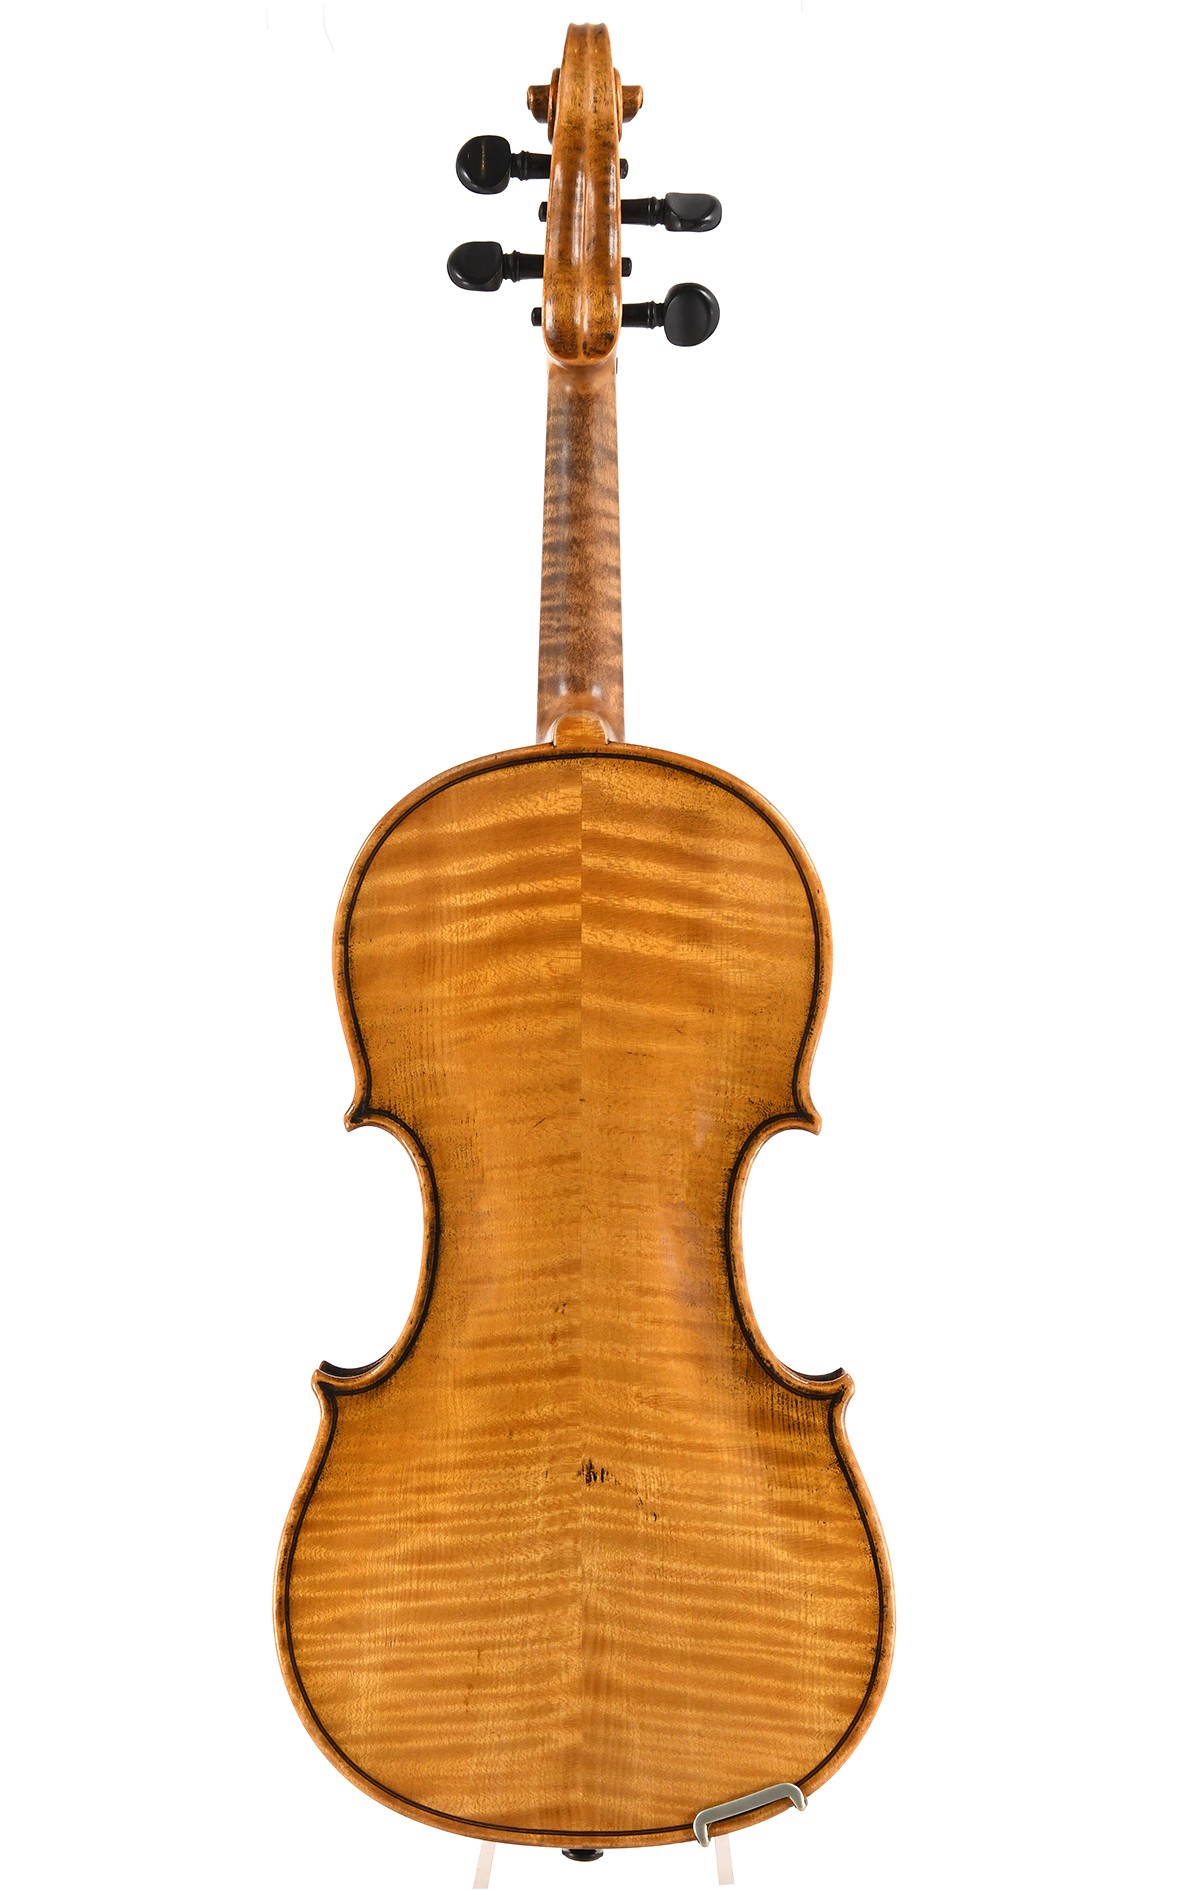 Scvhuster & Co violin from Markneukirchen